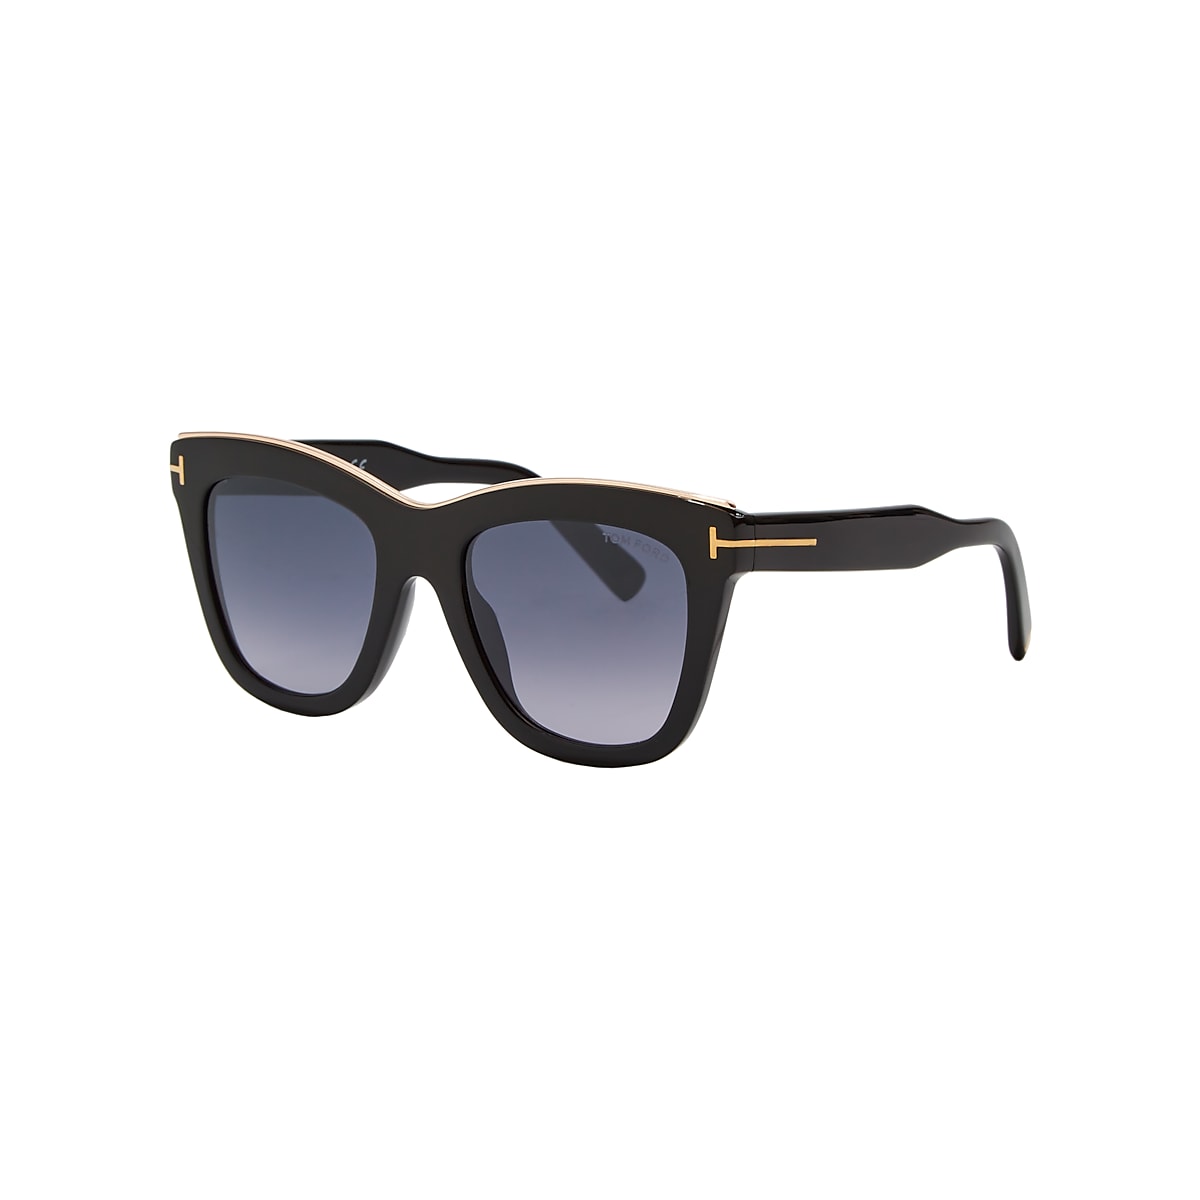 TOM FORD FT0685 Black Shiny - Women Luxury Sunglasses, Grey Mirror Lens